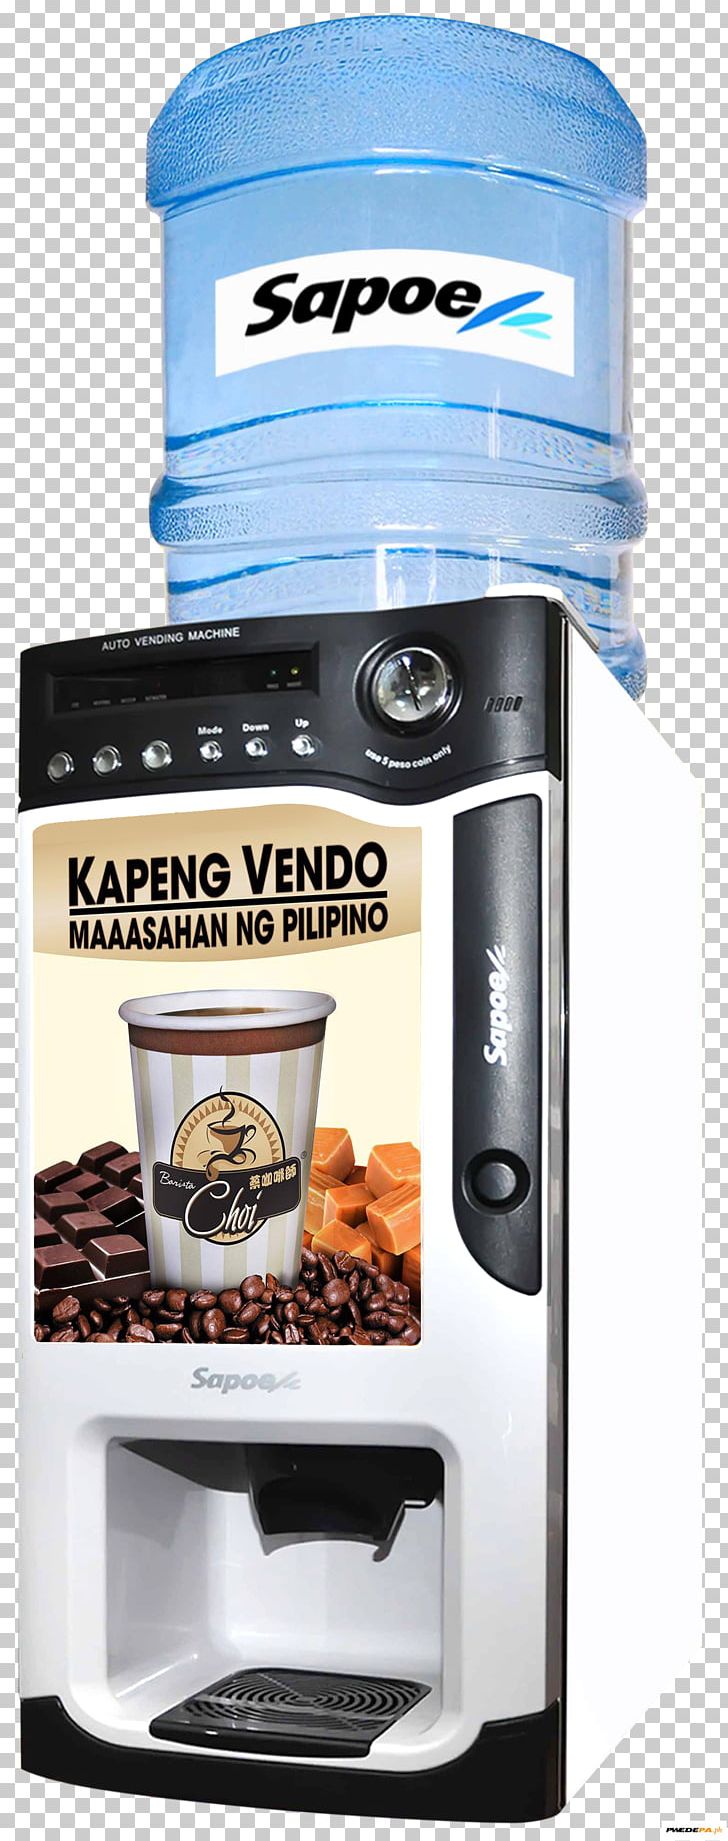 Coffeemaker Coca-Cola Coffee Vending Machine Vending Machines PNG, Clipart, Barista, Business, Cocacola, Coffee, Coffeemaker Free PNG Download